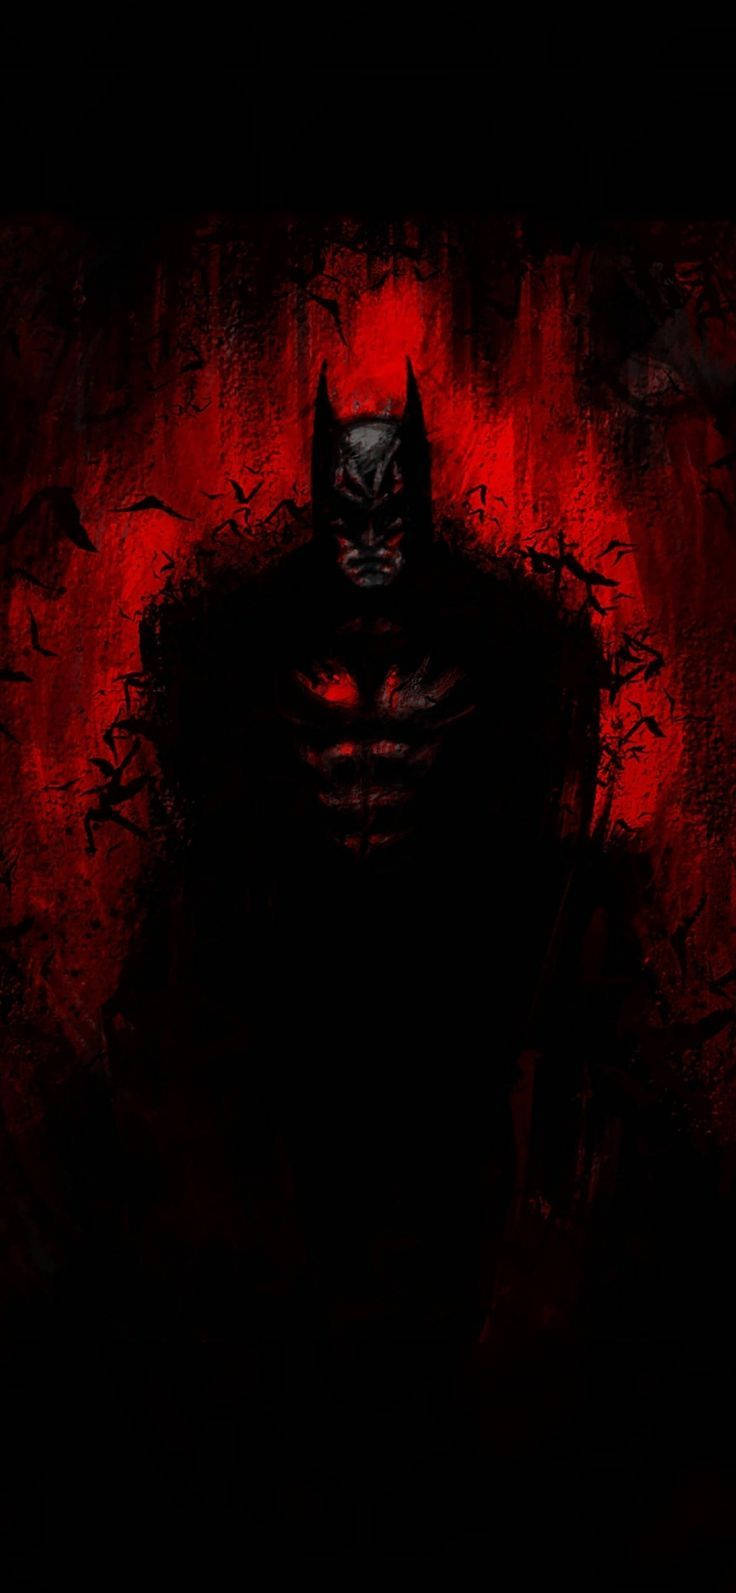 69+] Dark Knight Wallpaper Hd - WallpaperSafari